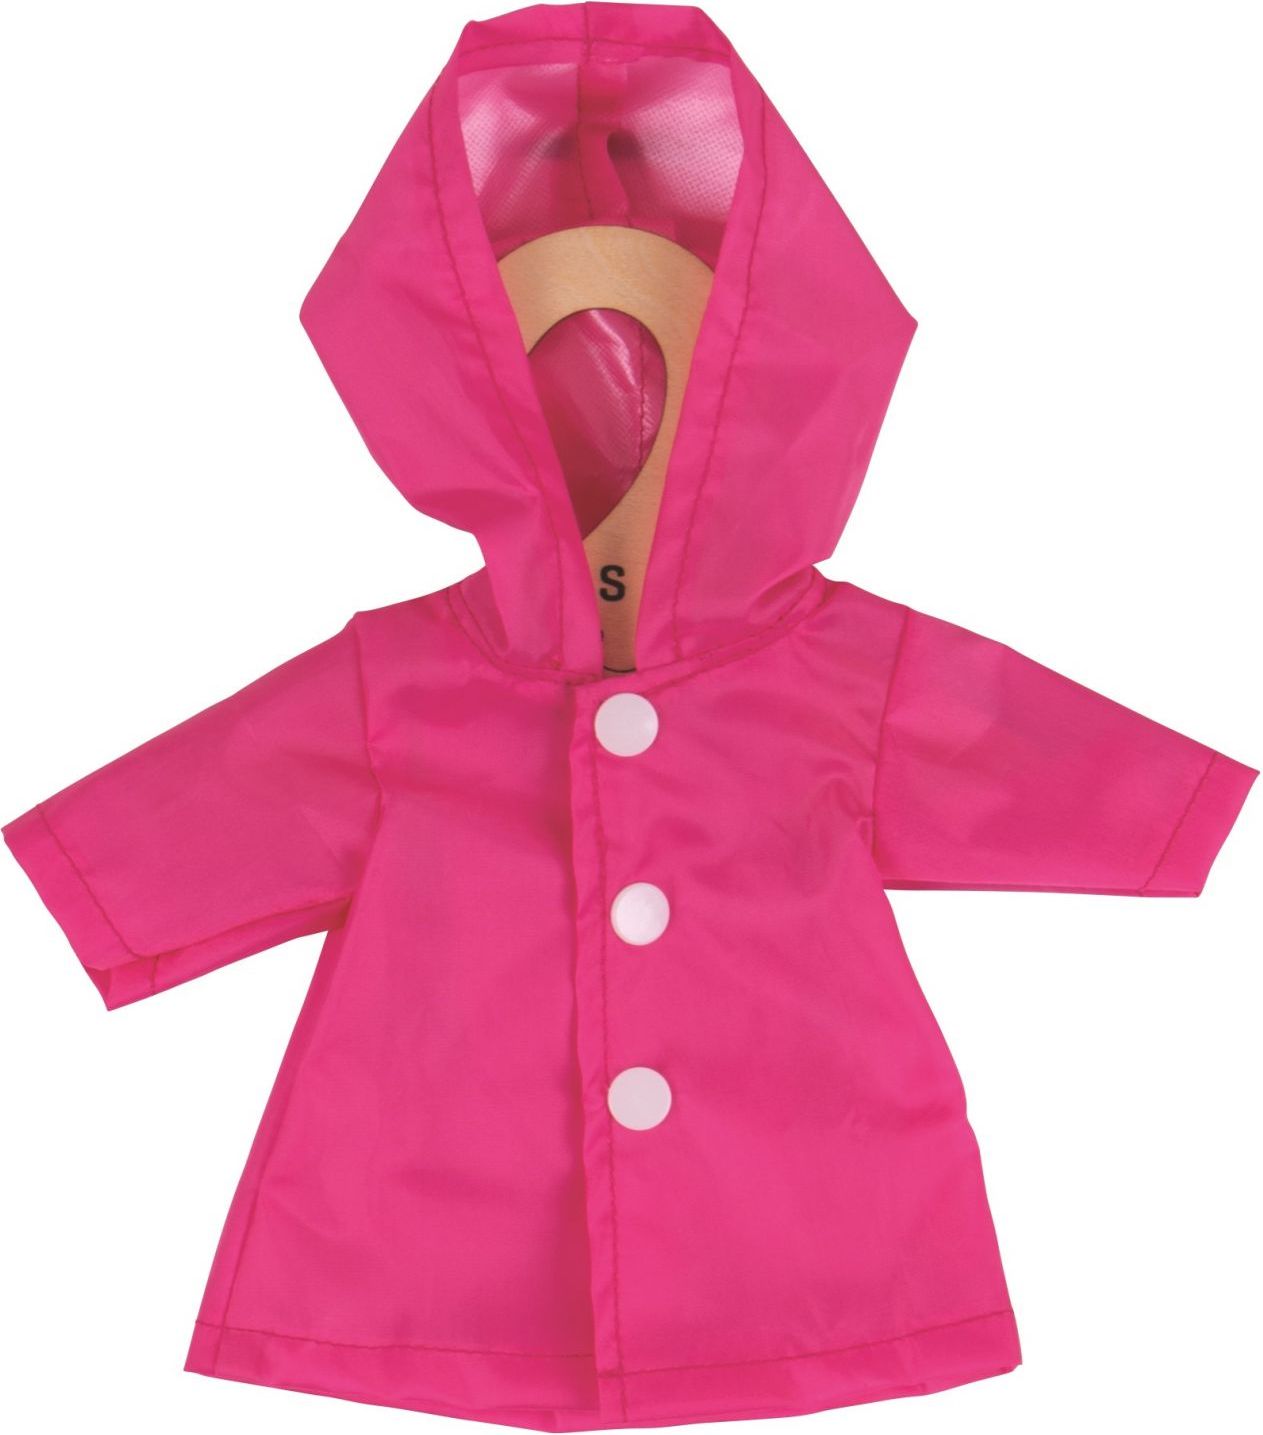 Bigjigs Toys Růžový kabátek pro panenku 28 cm - obrázek 1